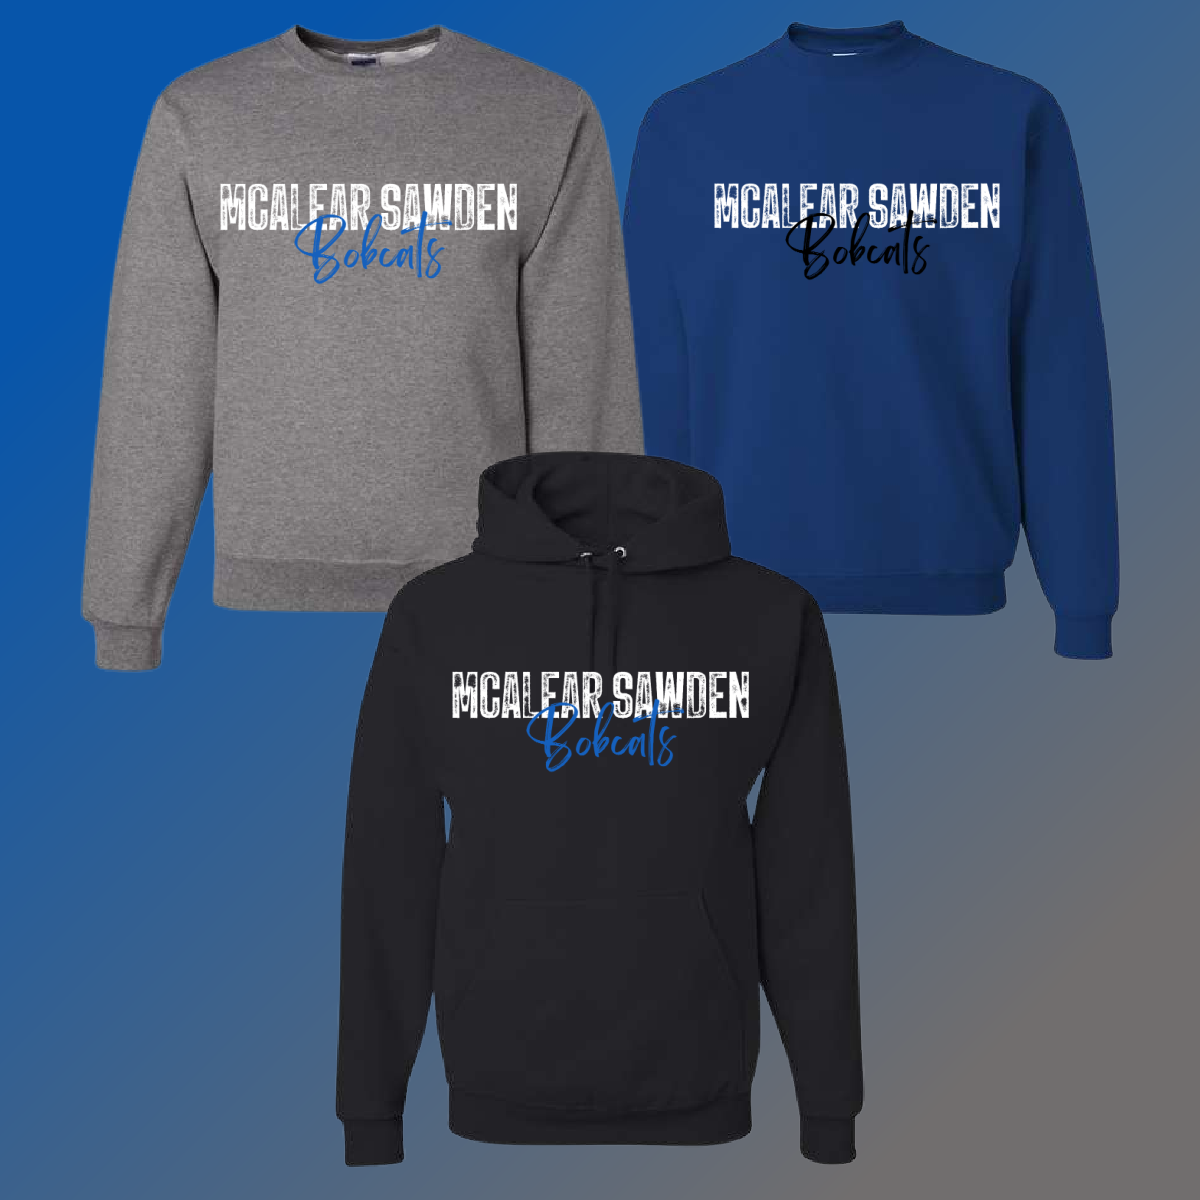 McAlear Sawden Bobcats  - Simple Stamped Basic Sweatshirt